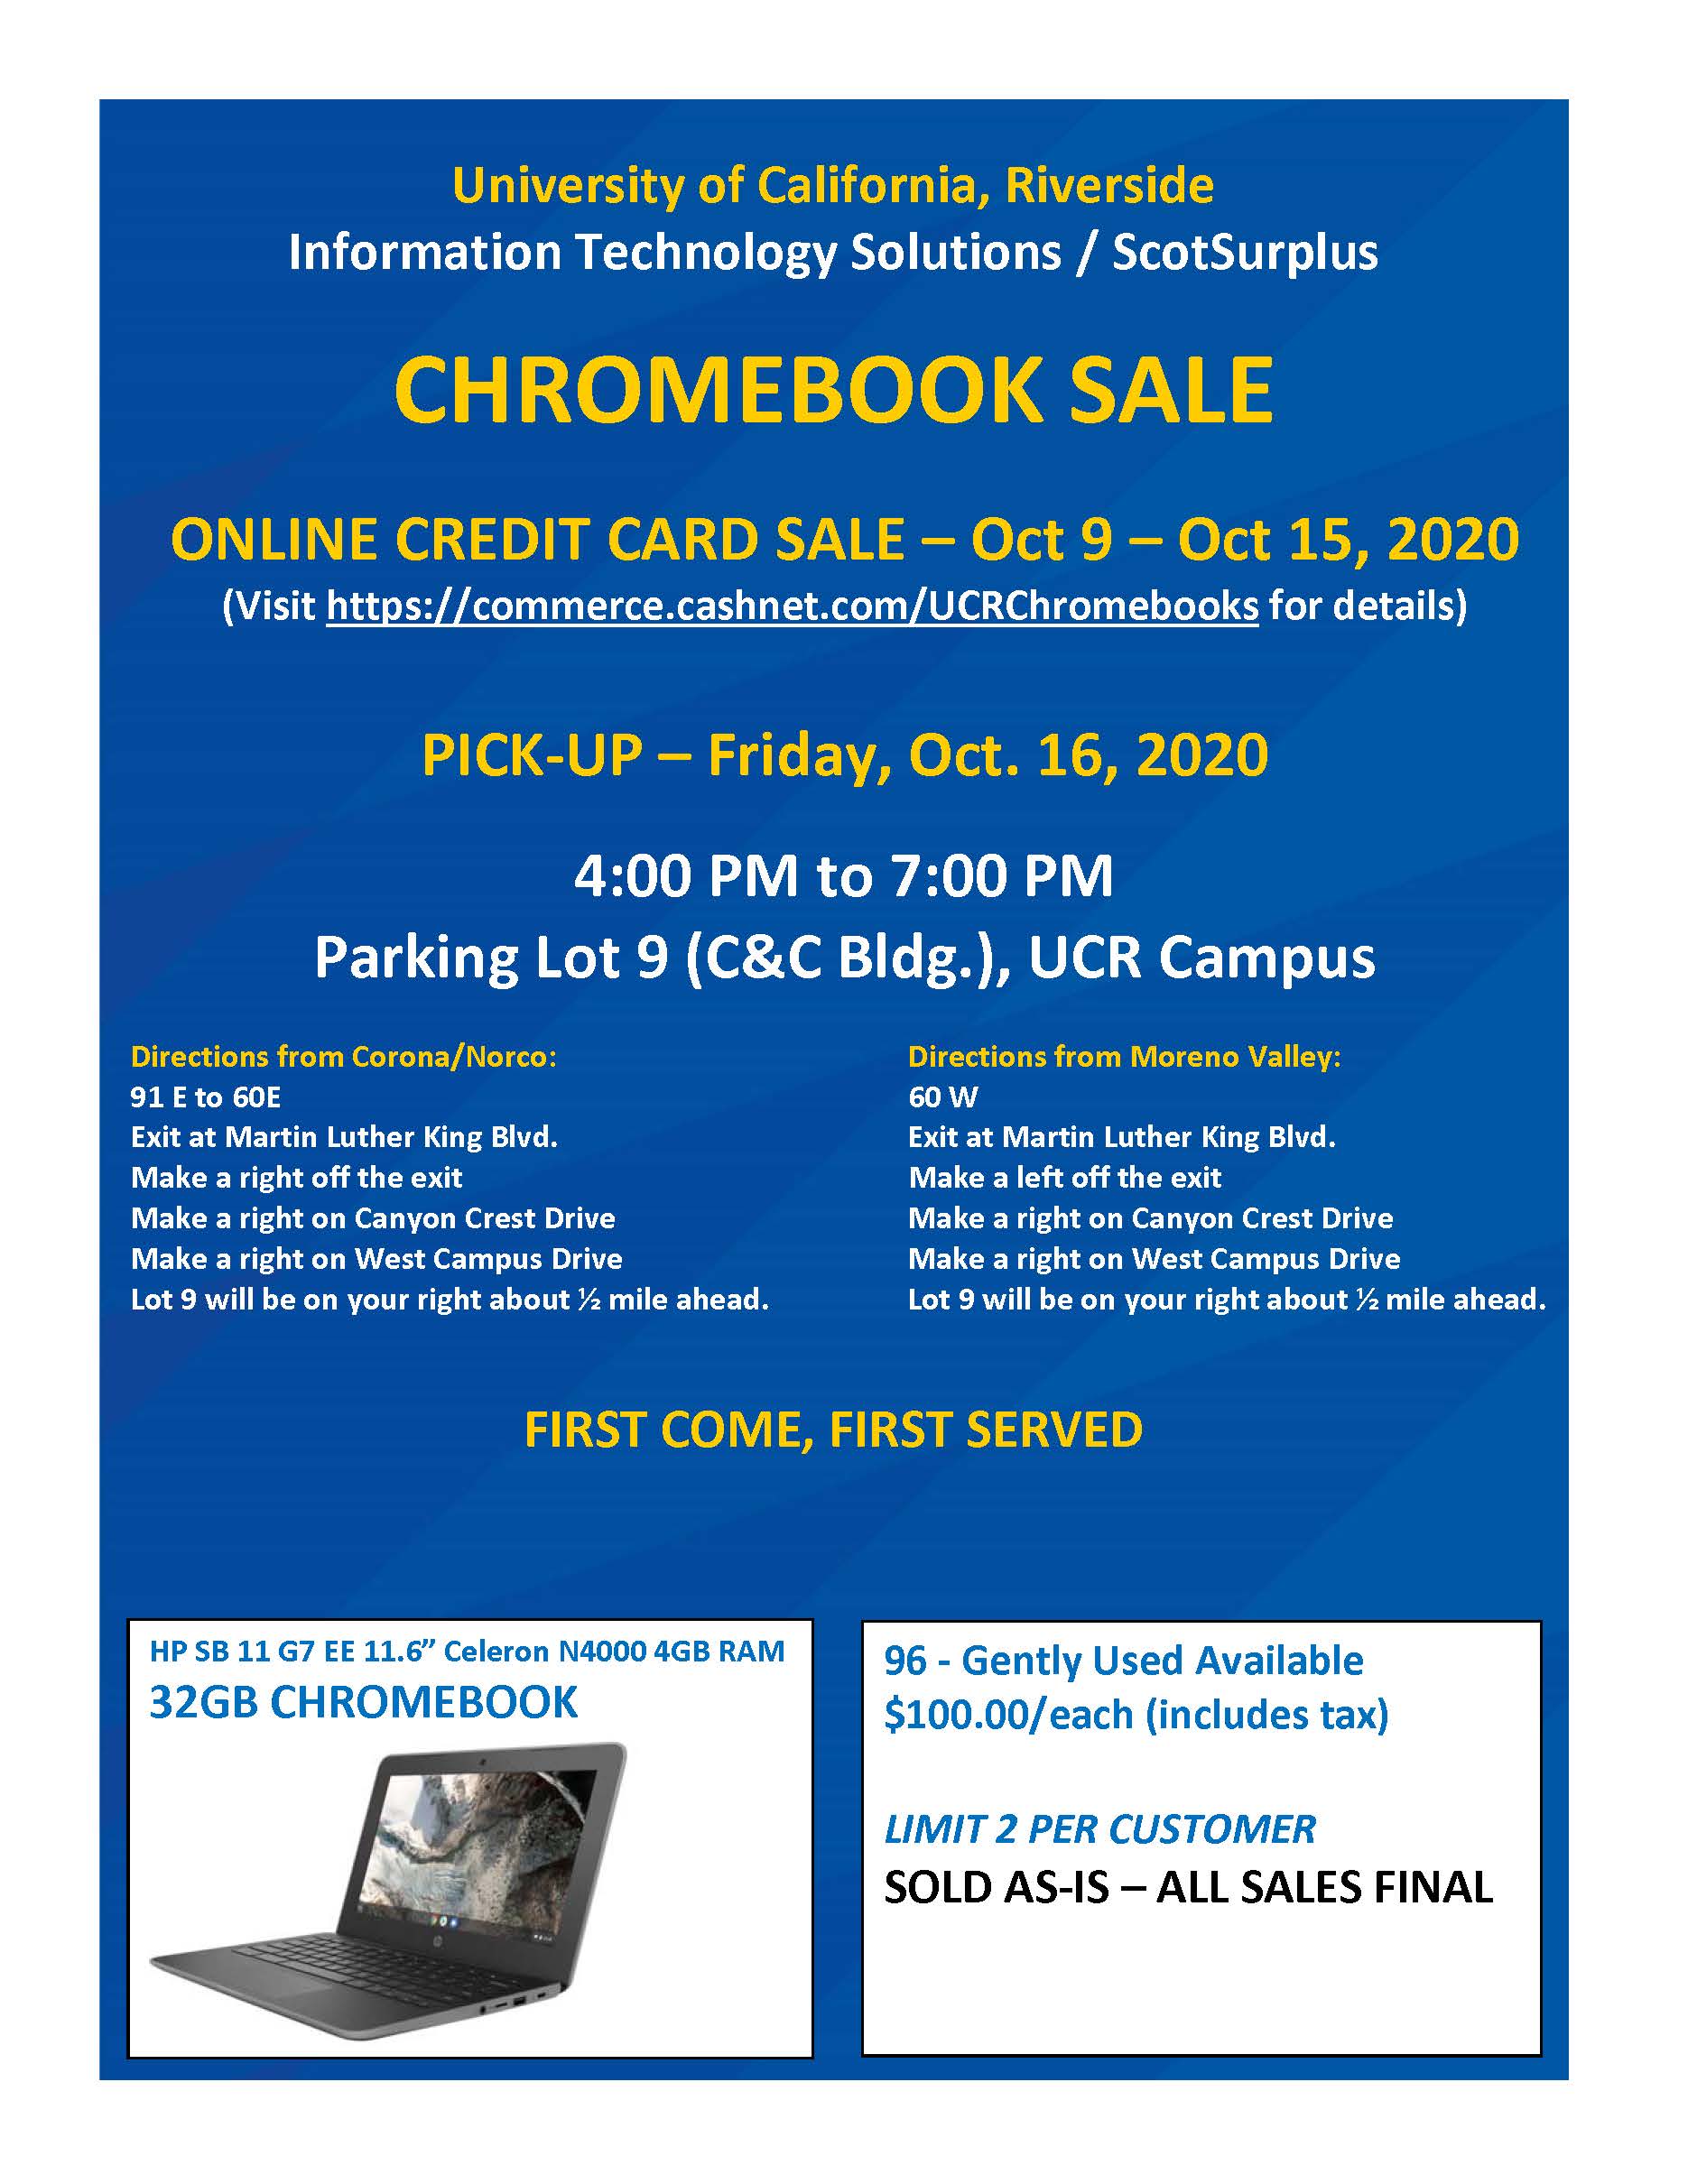 Chromebook Sale #2 Flyer 2020